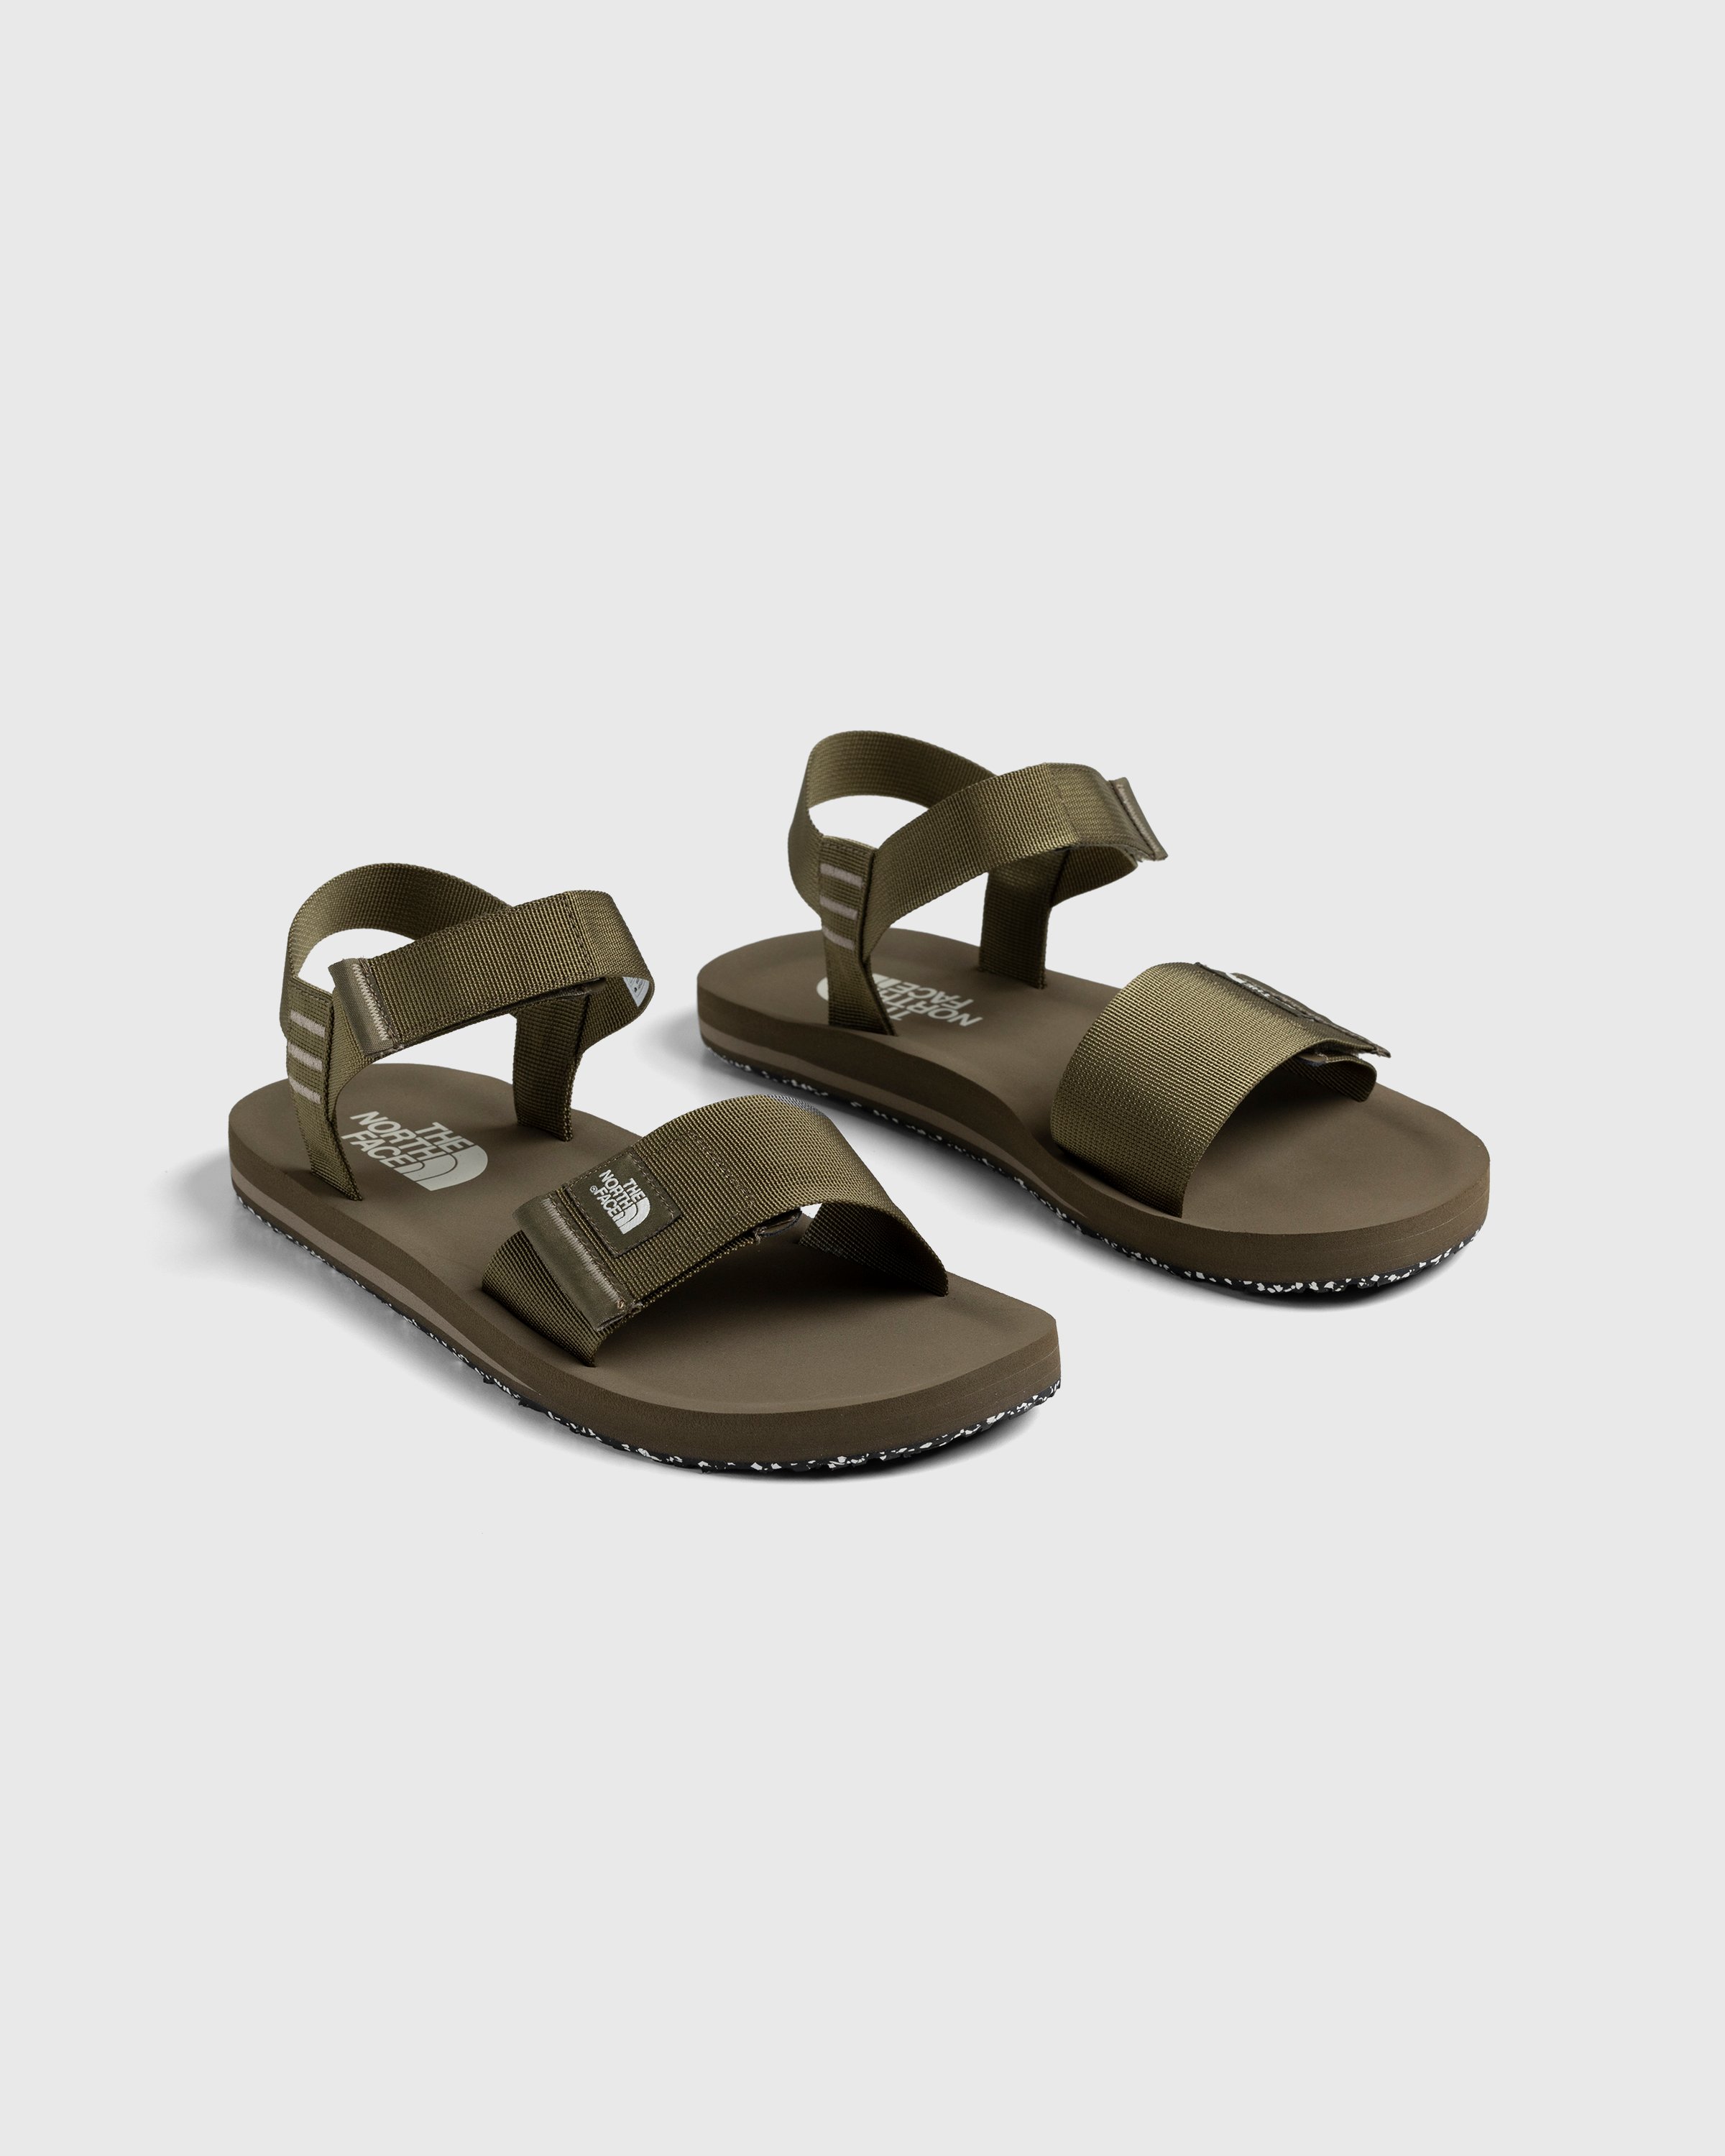 The North Face - Skeena Sport Sandal Militaryolive/Mineralgrey - Footwear - Green - Image 3